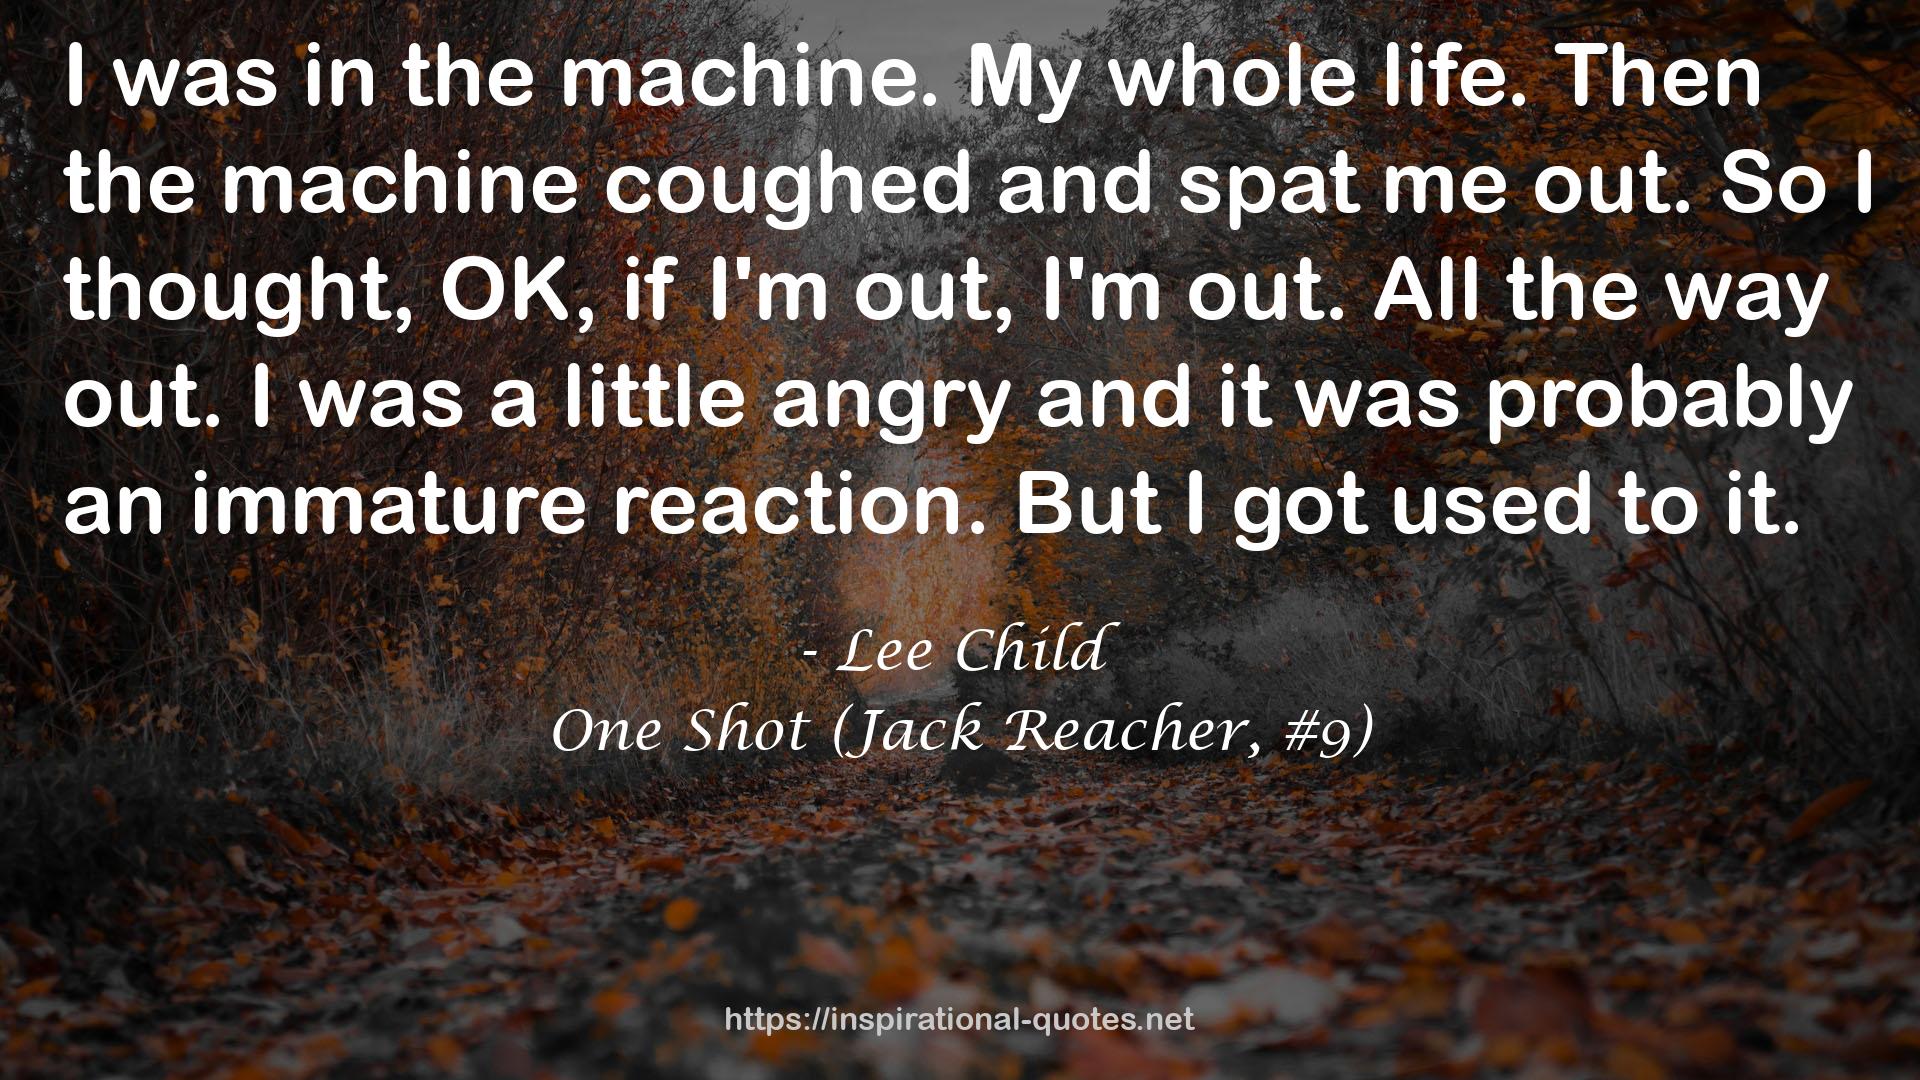 One Shot (Jack Reacher, #9) QUOTES